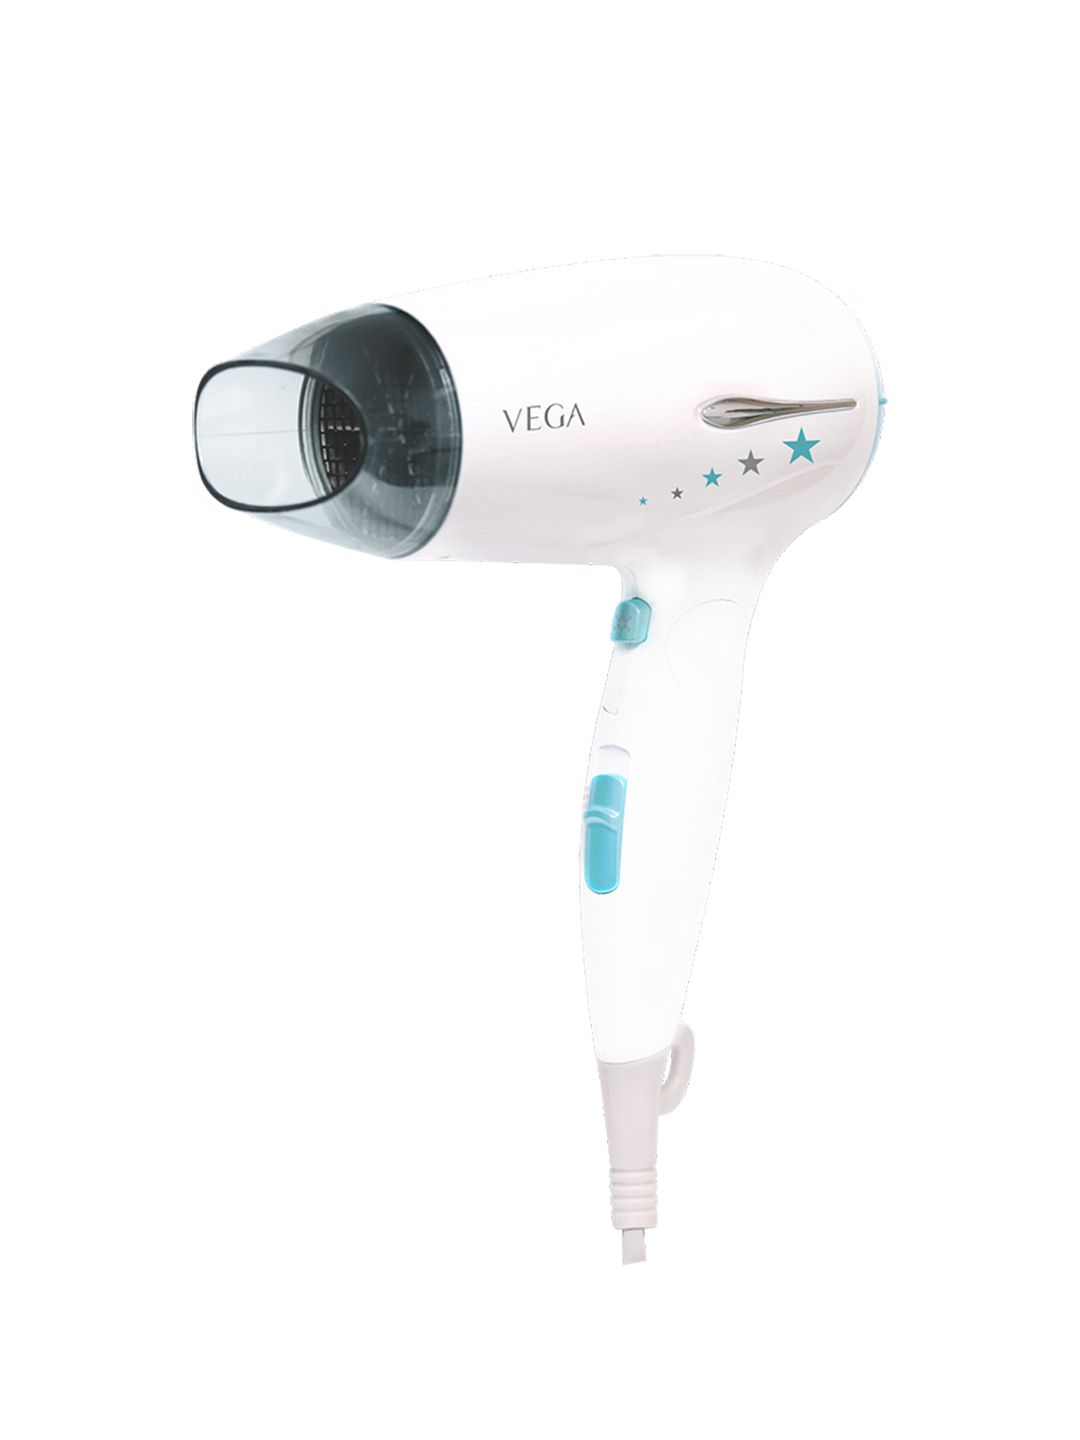 VEGA Women VHDH-22 Insta Wave 1600 Watt Hair Dryer - White & Blue Price in India